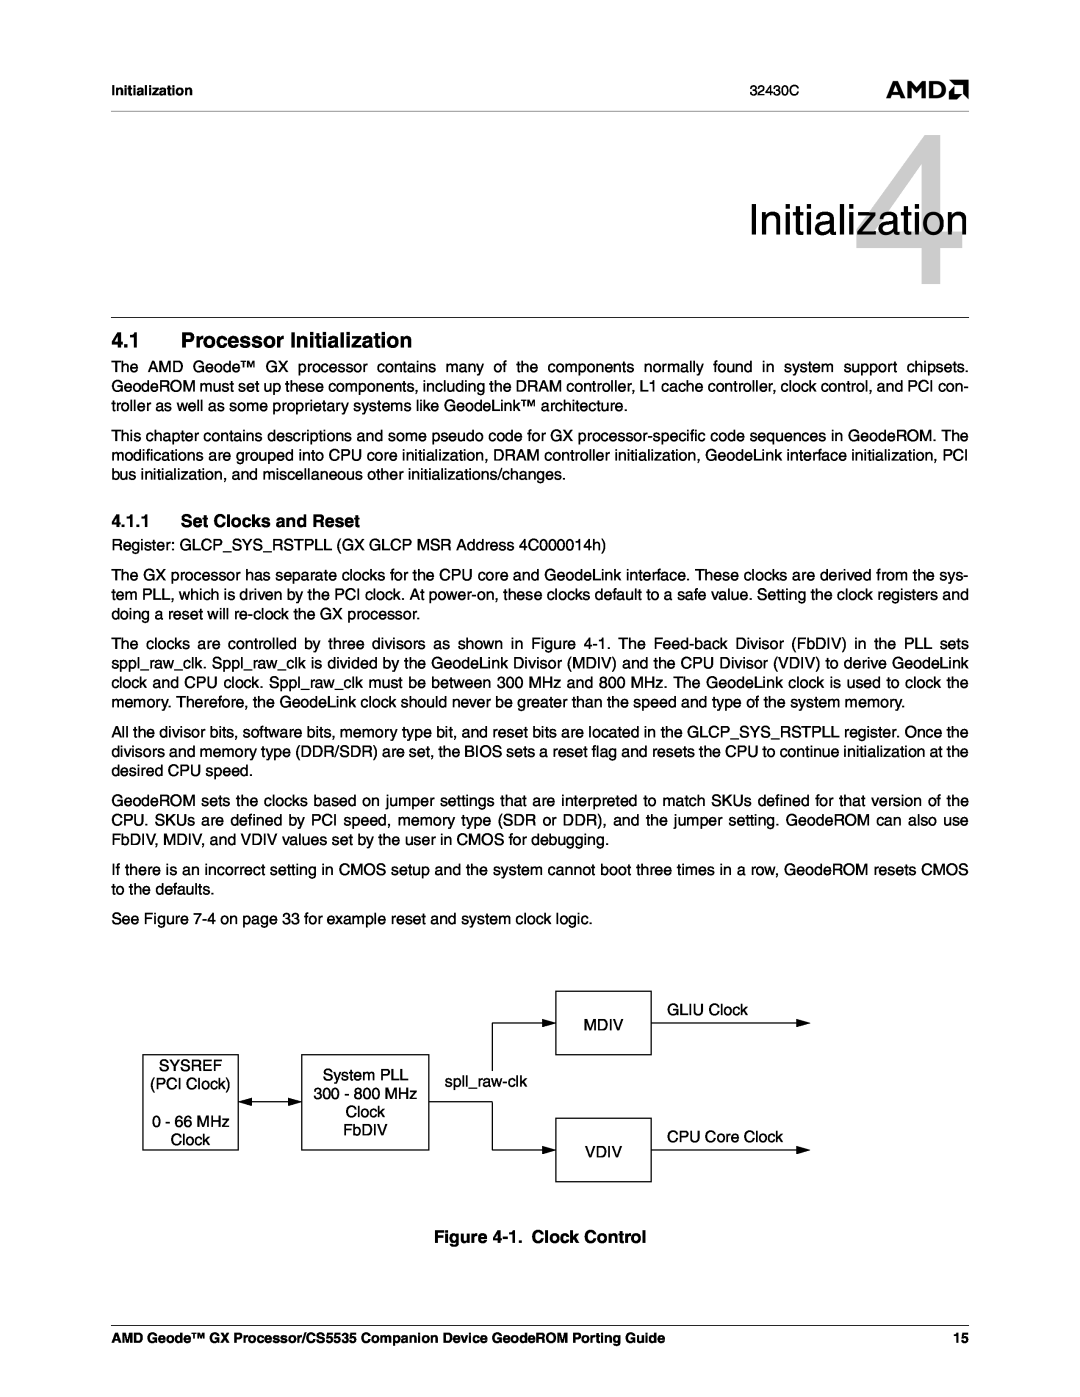 AMD CS5535 manual Initialization4, Processor Initialization, Set Clocks and Reset, 1. Clock Control 